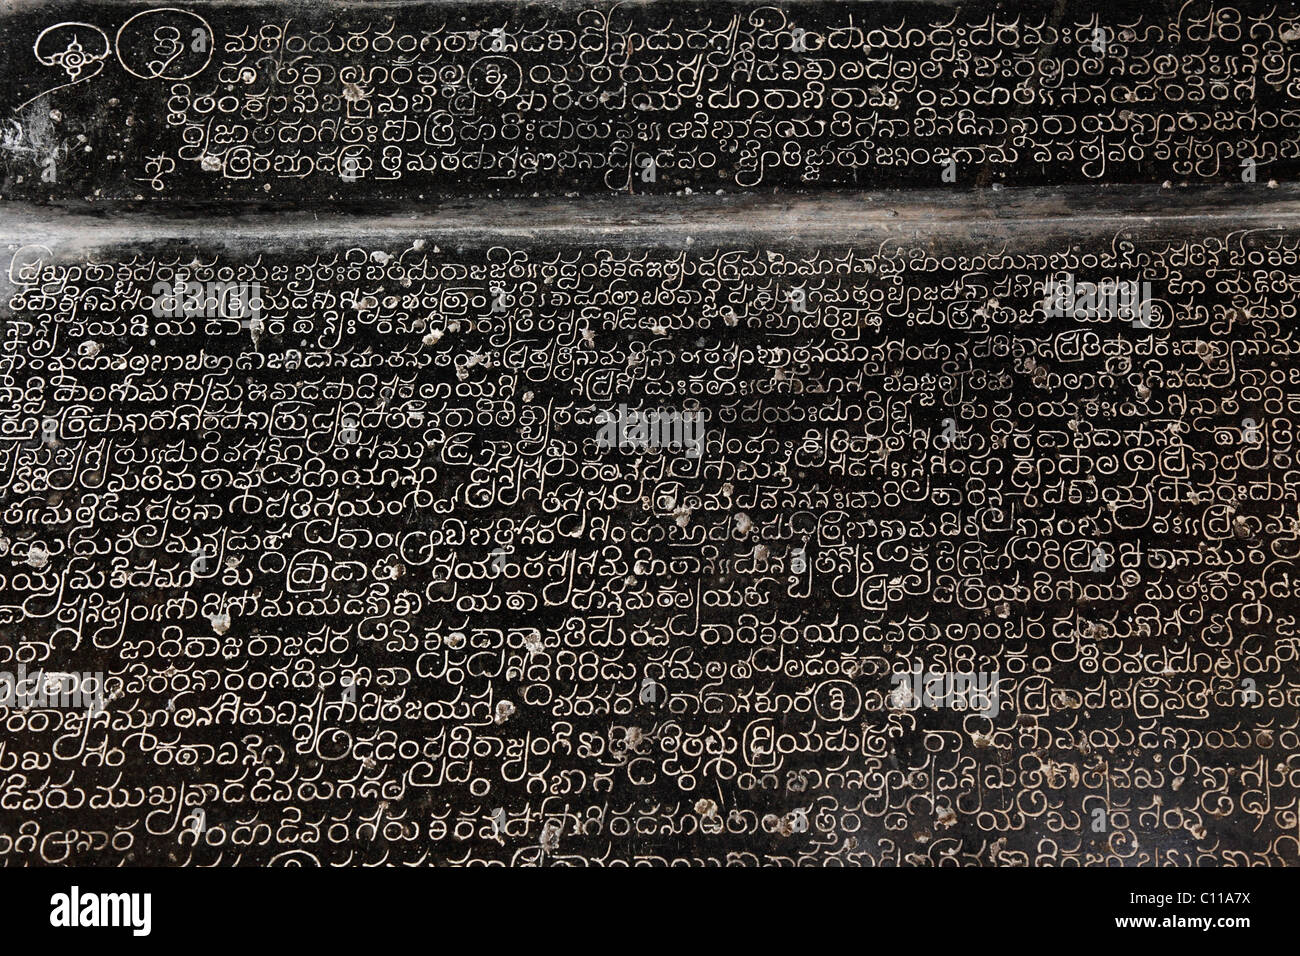 Stone inscription tablet, Kesava Temple, Keshava temple, Somnathpur, Somanathapura, Karnataka, South India, India, South Asia Stock Photo